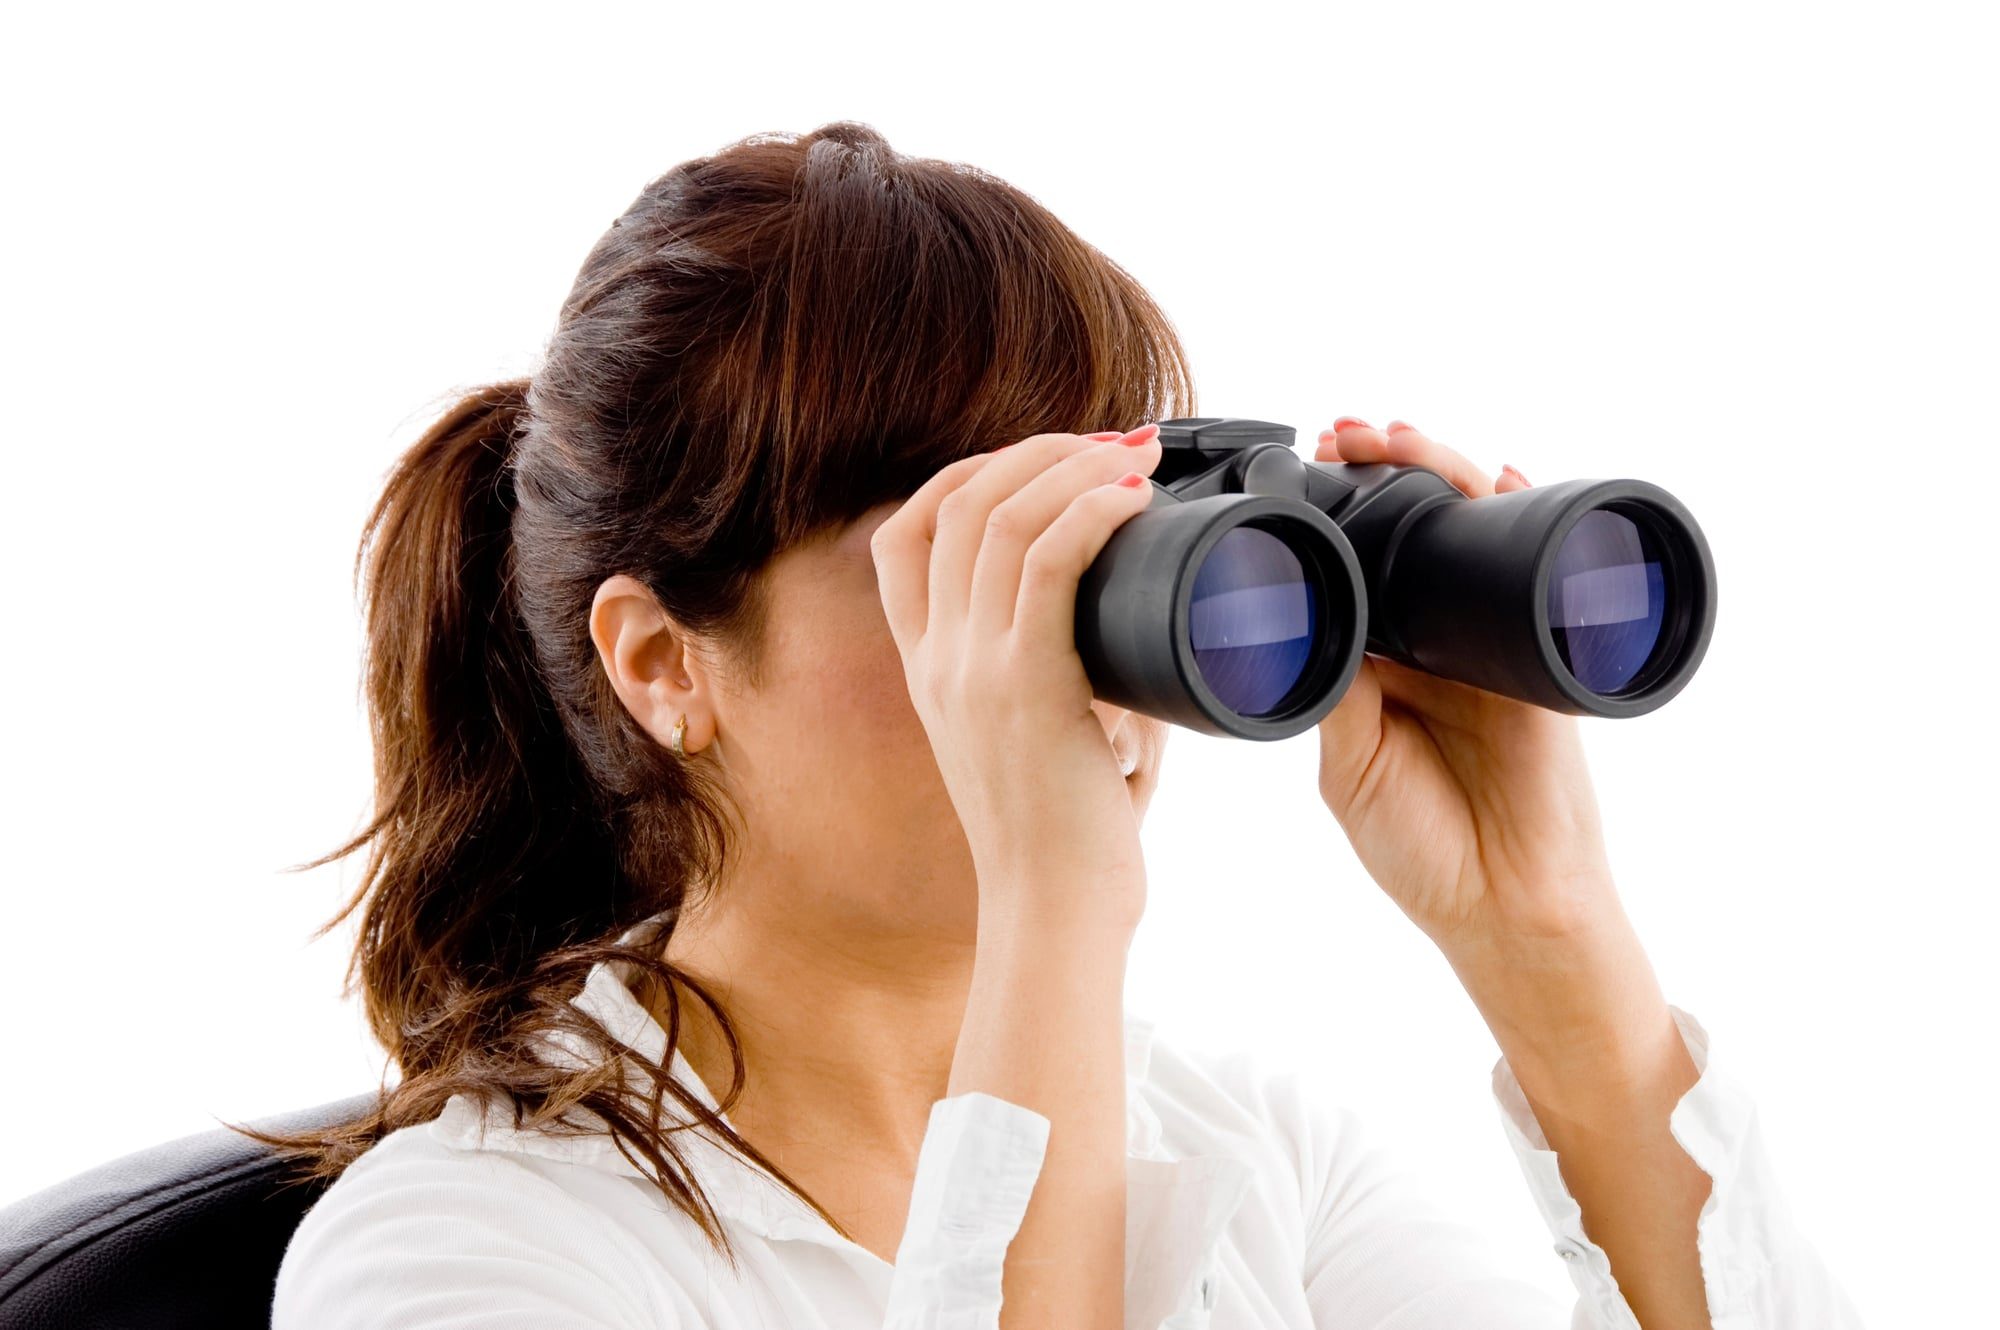 Using binoculars that represent looking deeply into client needs.